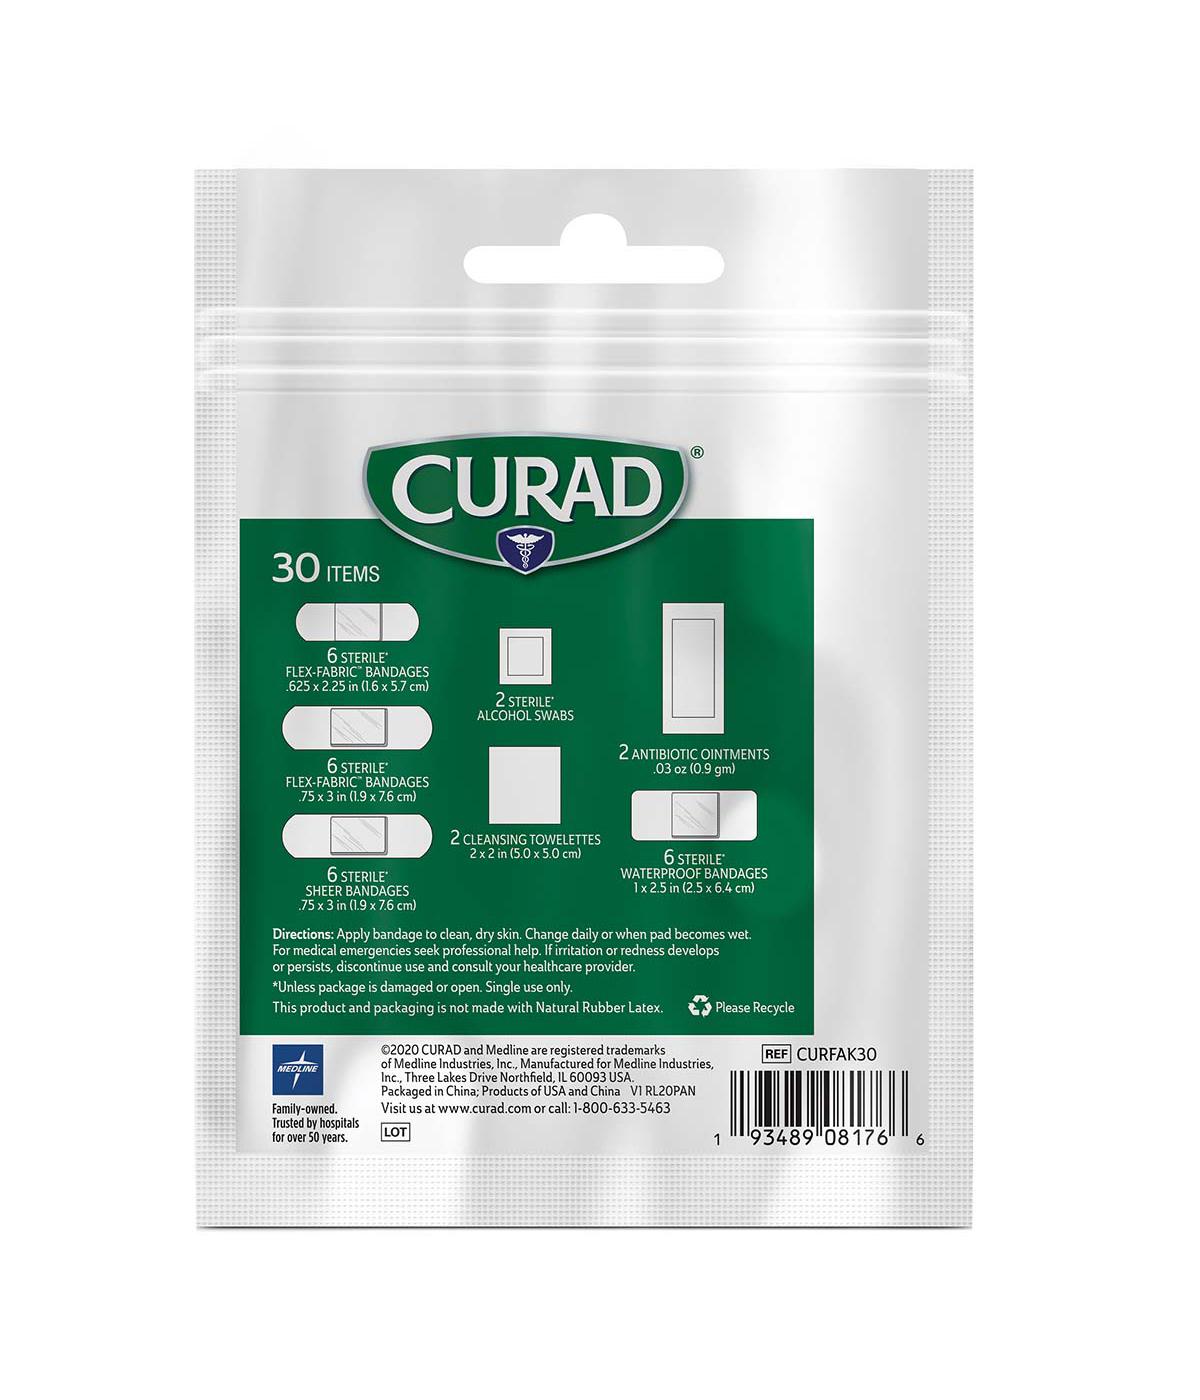 Curad Mini First Aid Kit; image 2 of 2